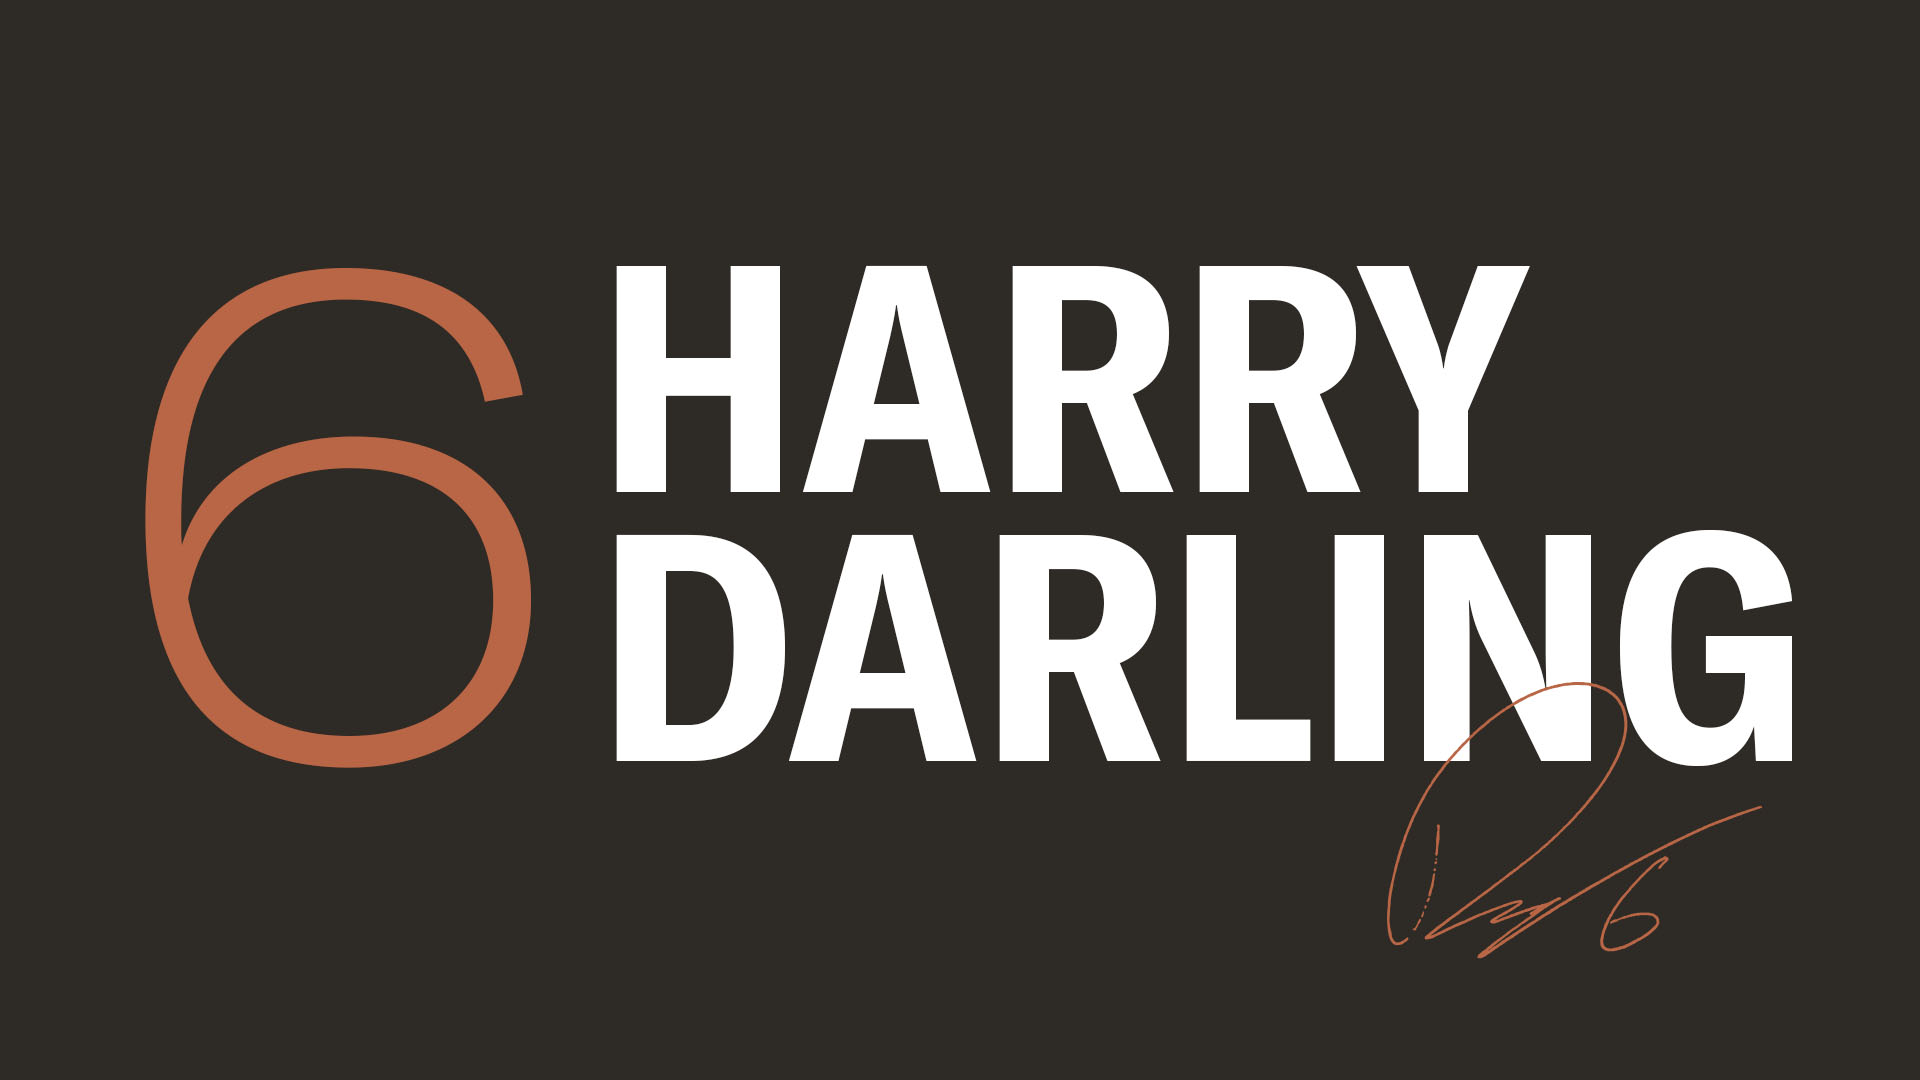 6 - Harry Darling